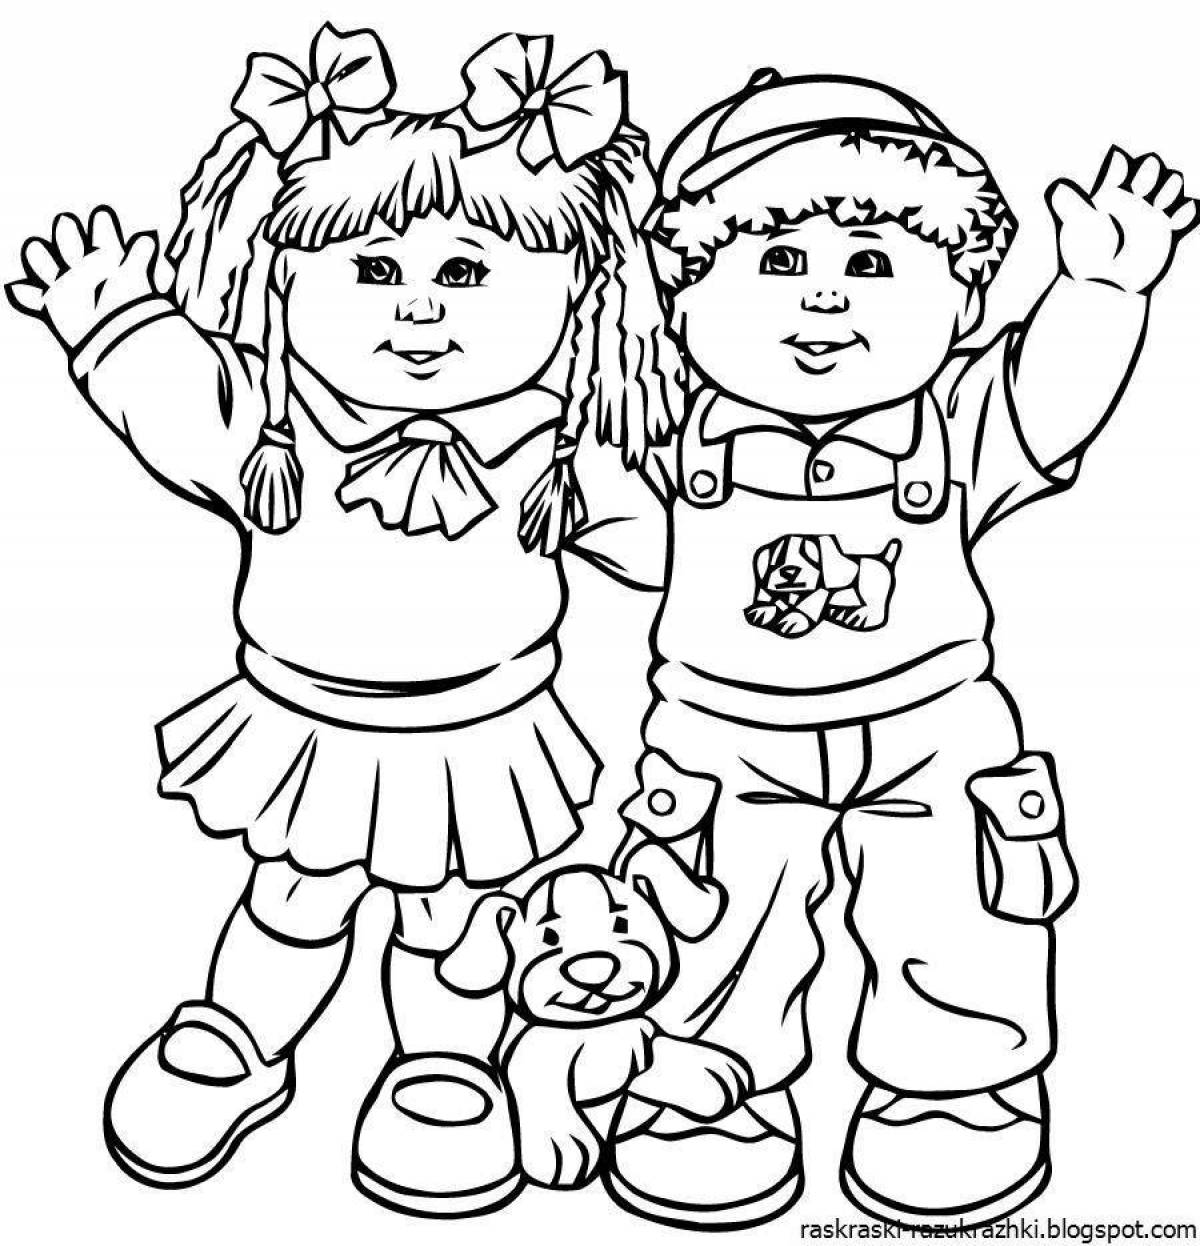 Creative friendship coloring book for preschoolers